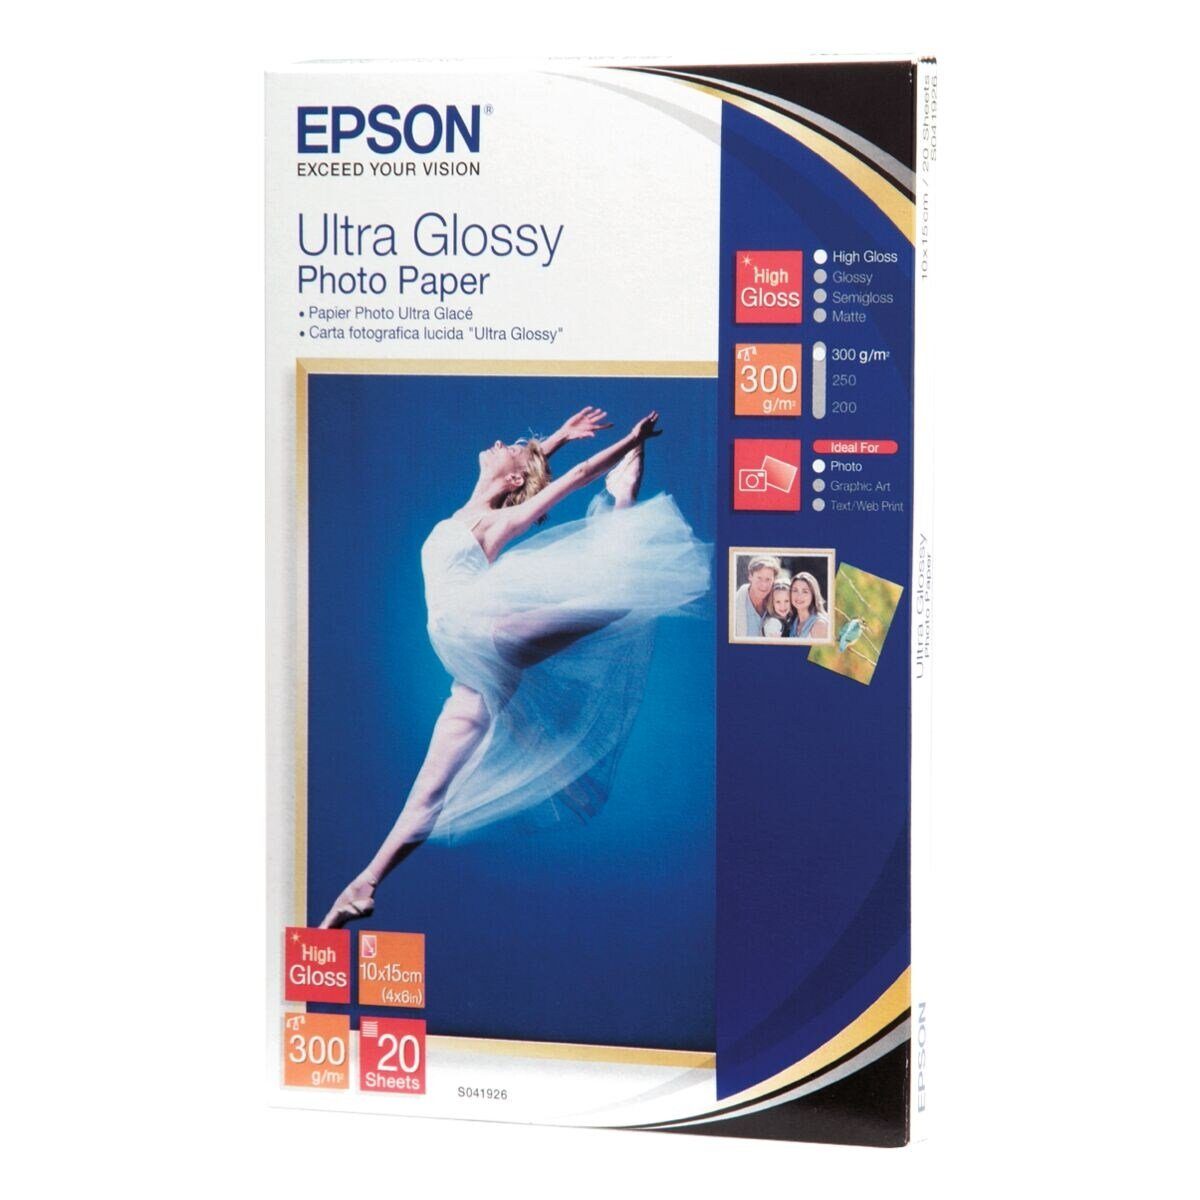 Epson Fotopapier »Ultra Glossy«, Format 10x15 cm, hochglänzend, 300 g/m²,  20 Blatt online kaufen | OTTO